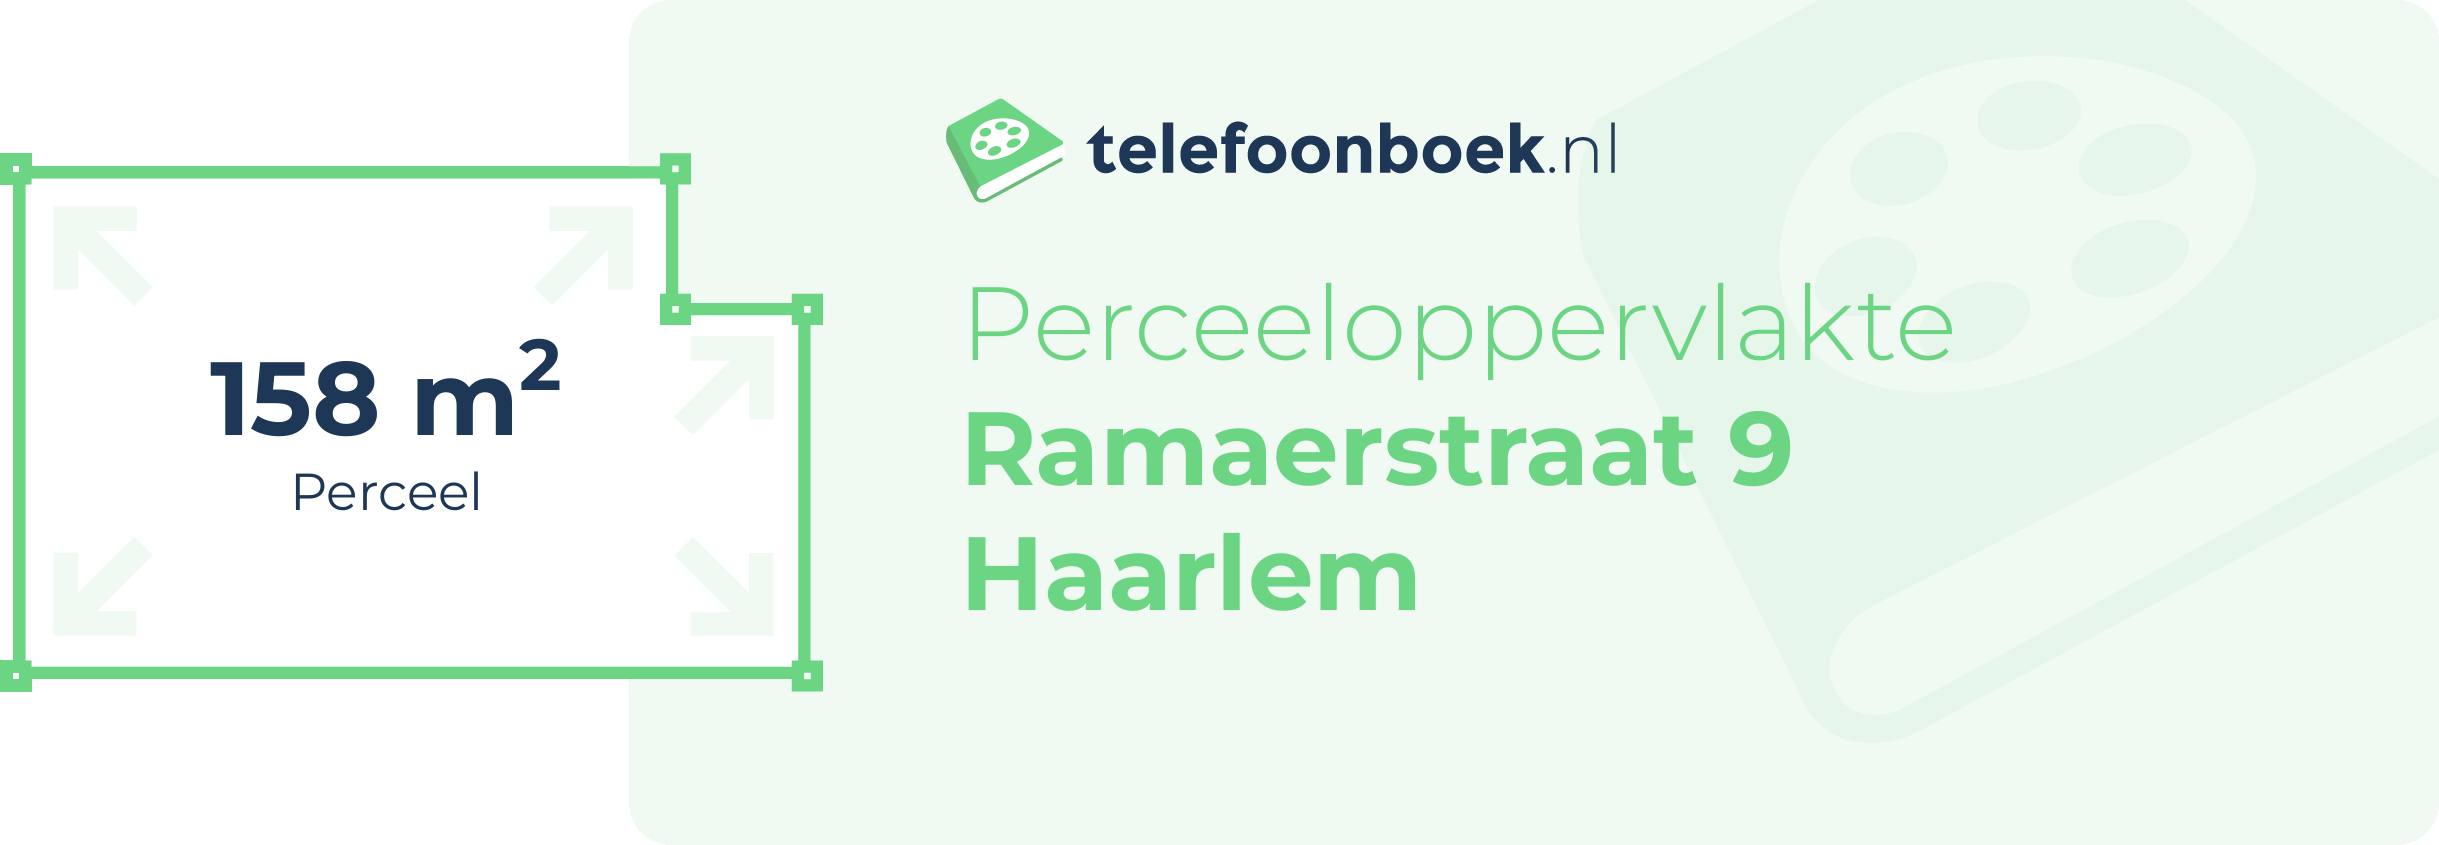 Perceeloppervlakte Ramaerstraat 9 Haarlem